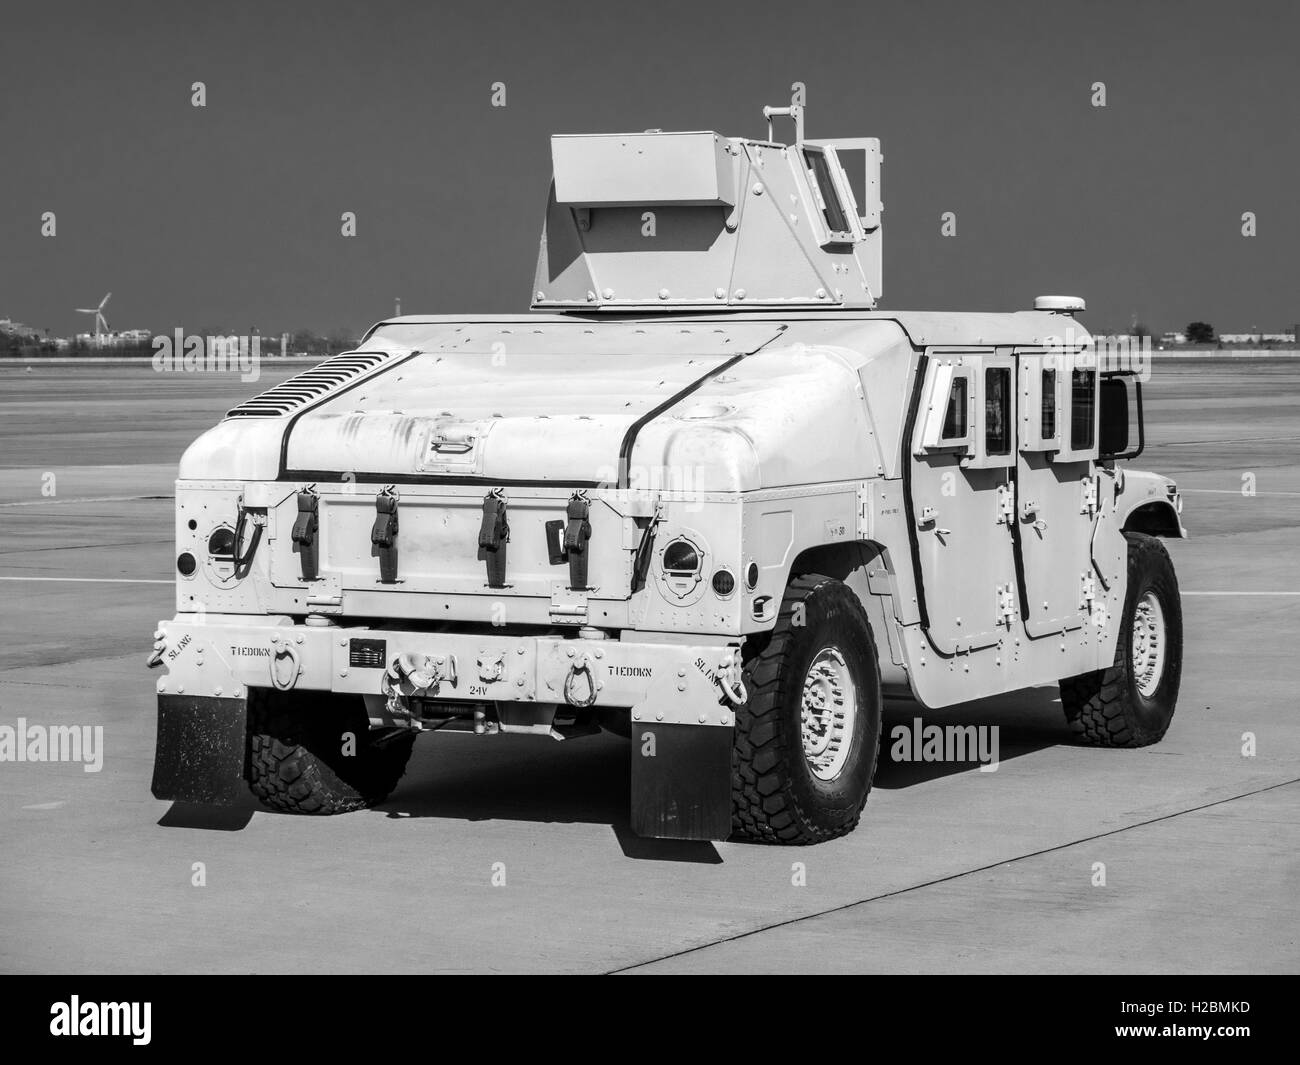 American armored vehicle HMMWV (Humvee) Stock Photo